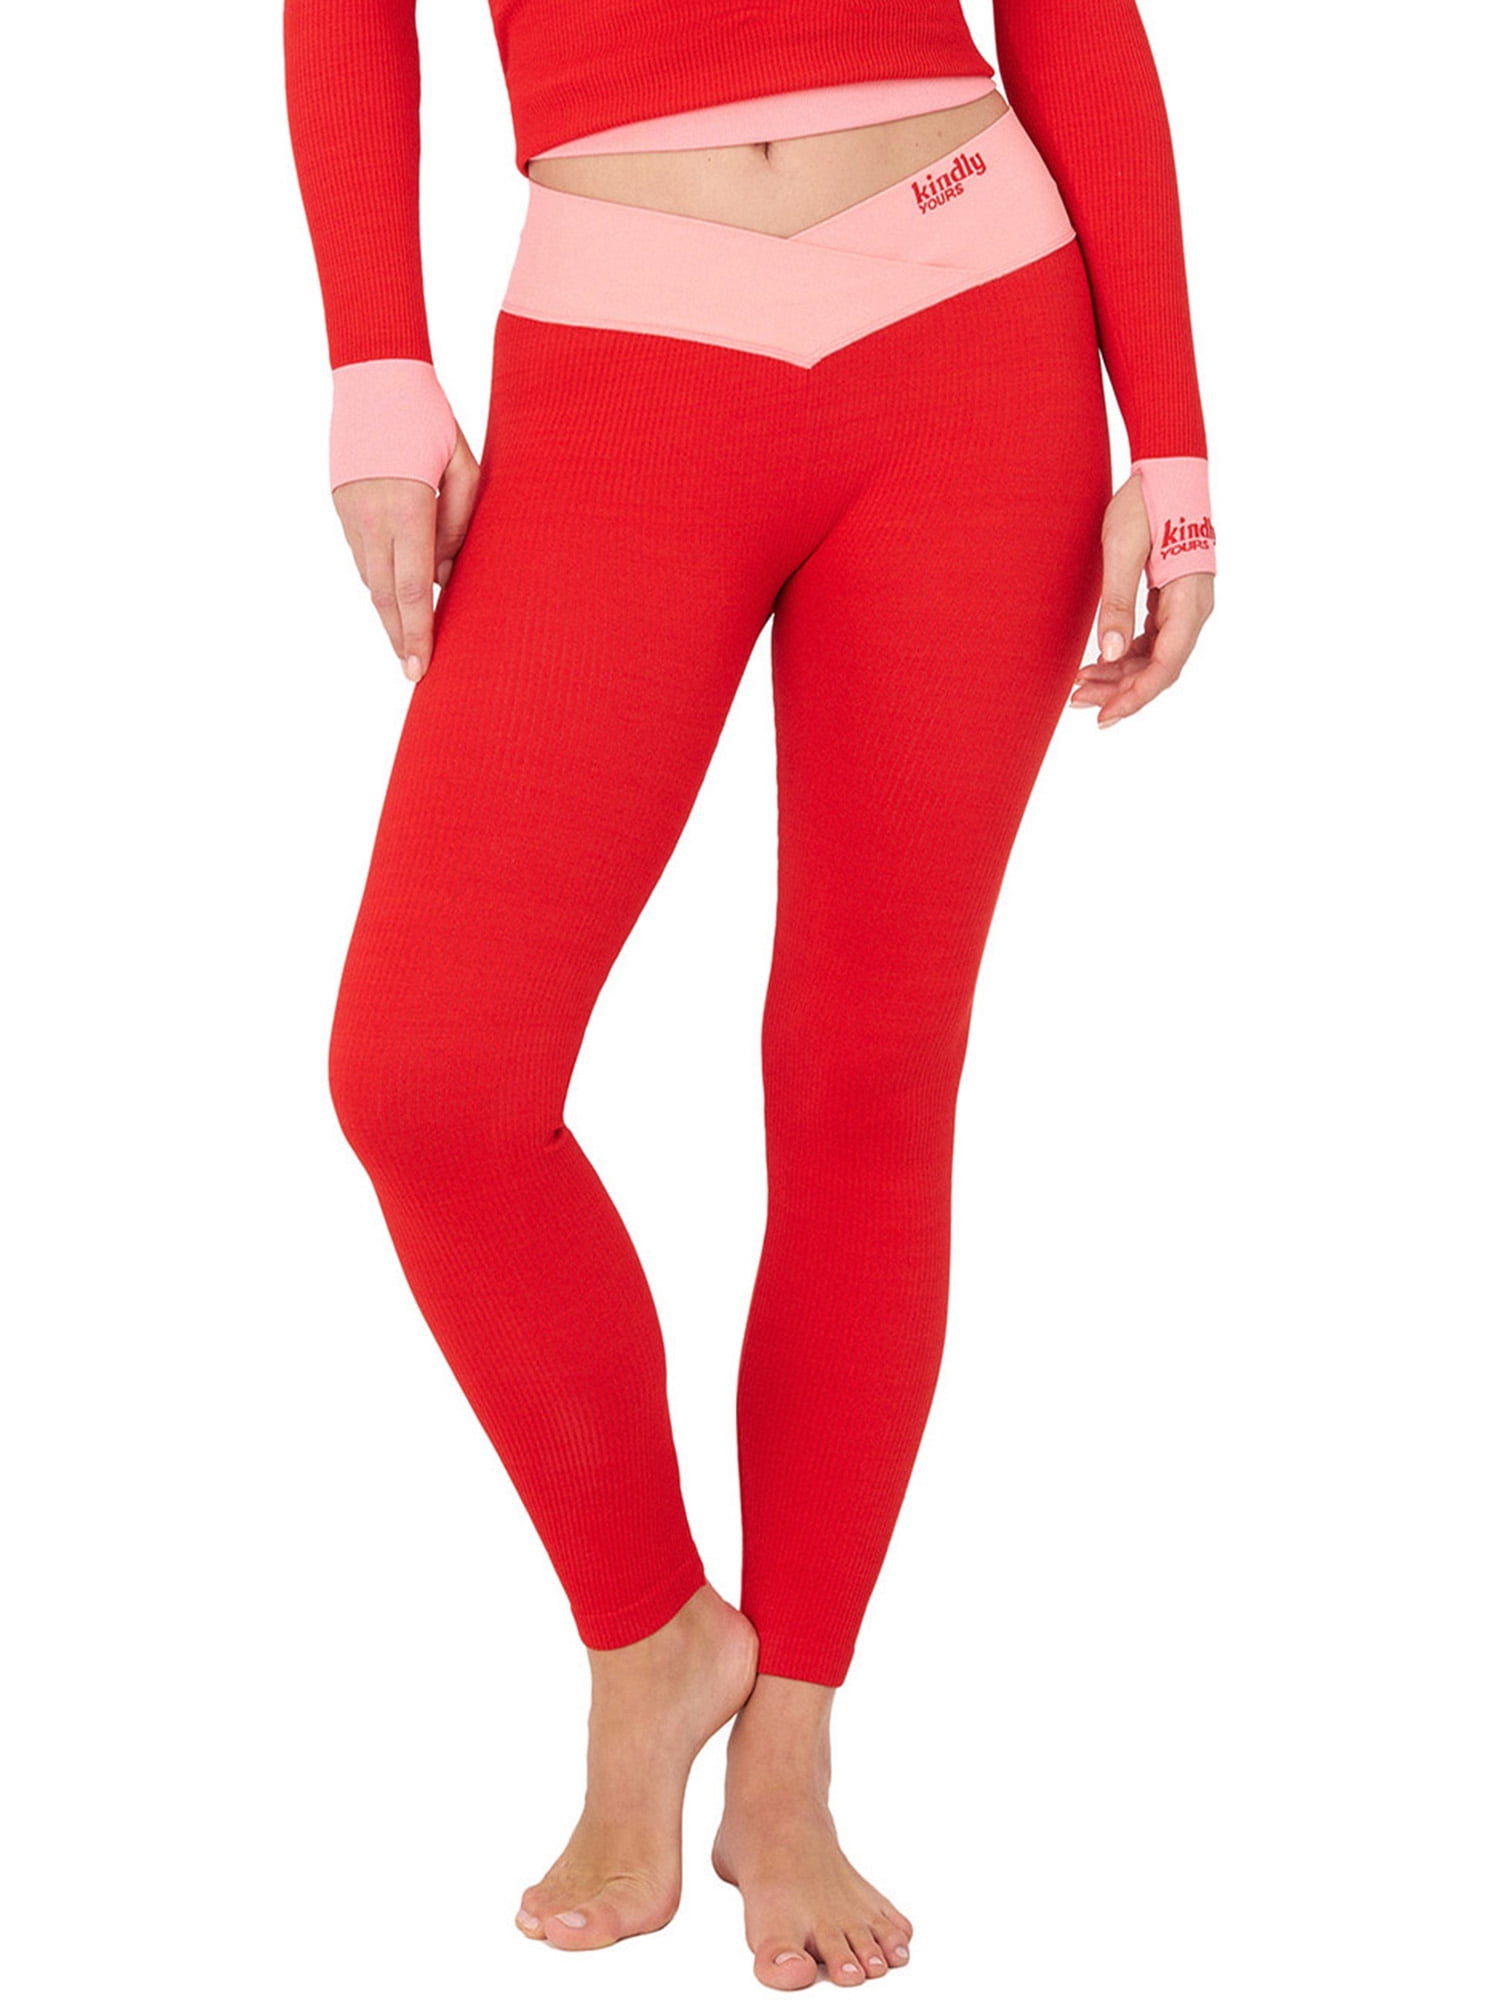  JJ Apparel Sexy Women's Leggings Seamless High Waist (XL, Red)  : Handmade Products